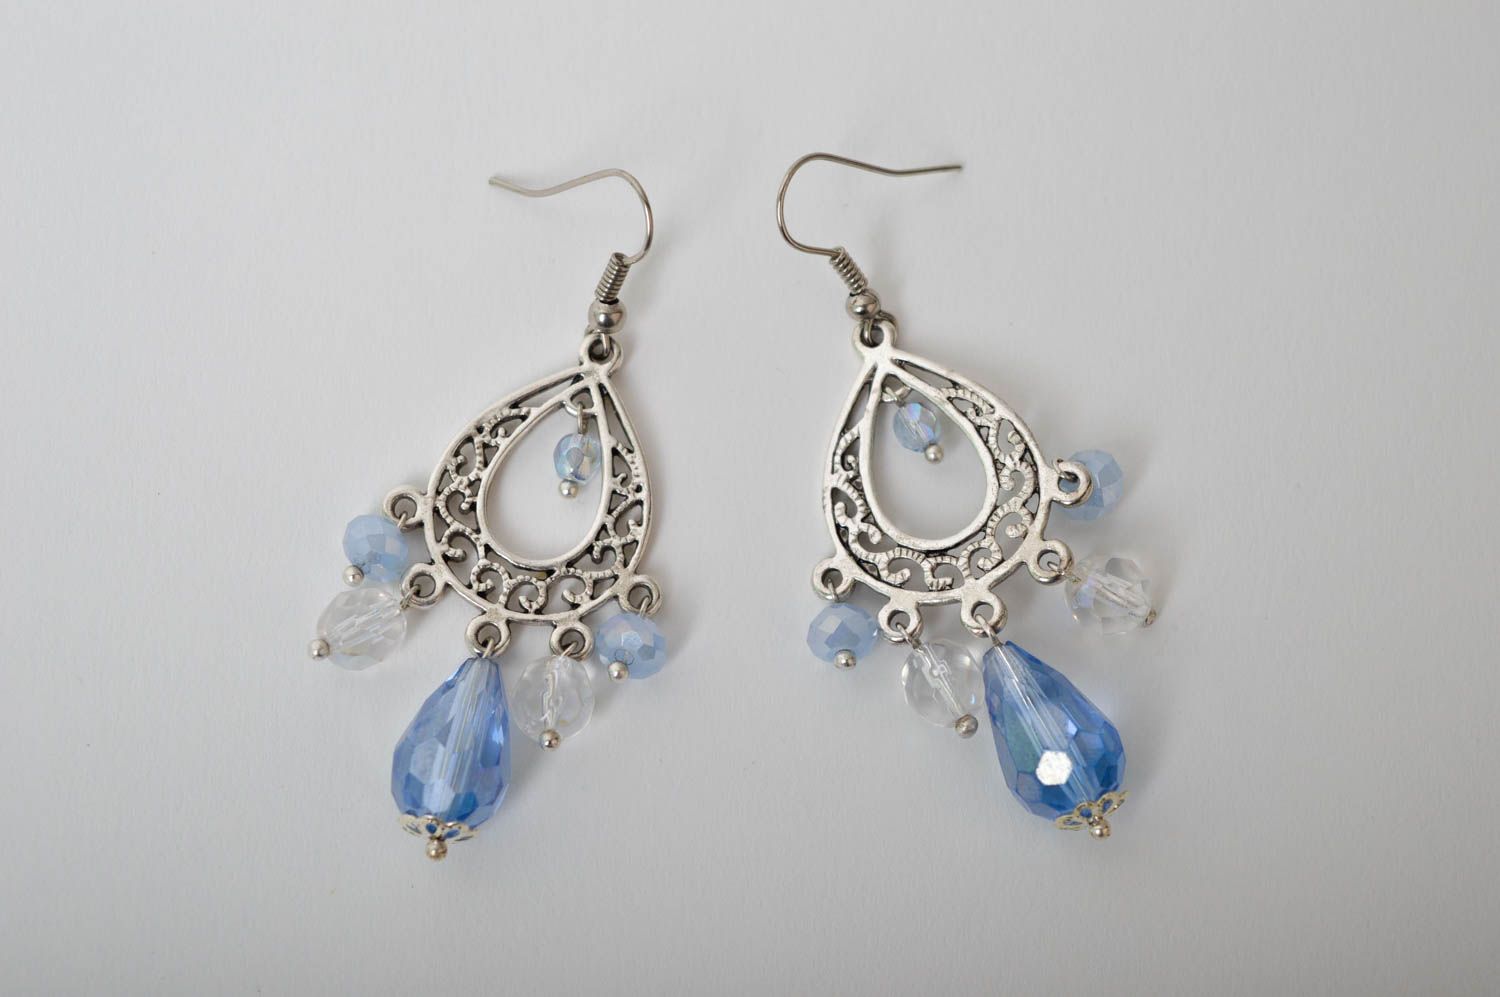 Beautiful handmade beaded earrings cool jewelry designs fashion trends photo 3